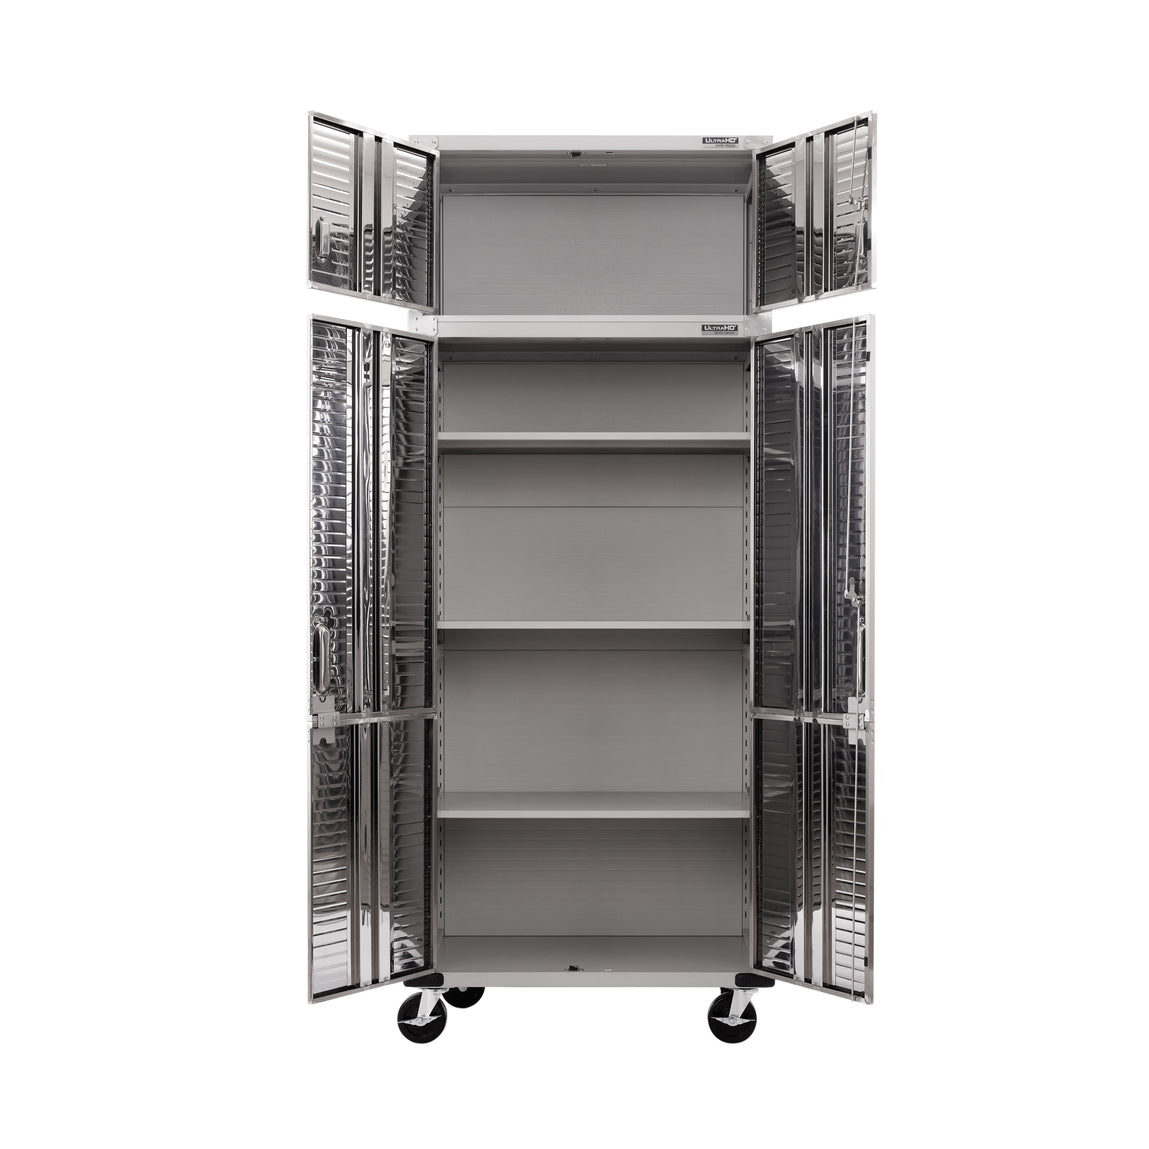 UltraHD Seville Classics UltraHD 7-Piece Storage Cabinet System